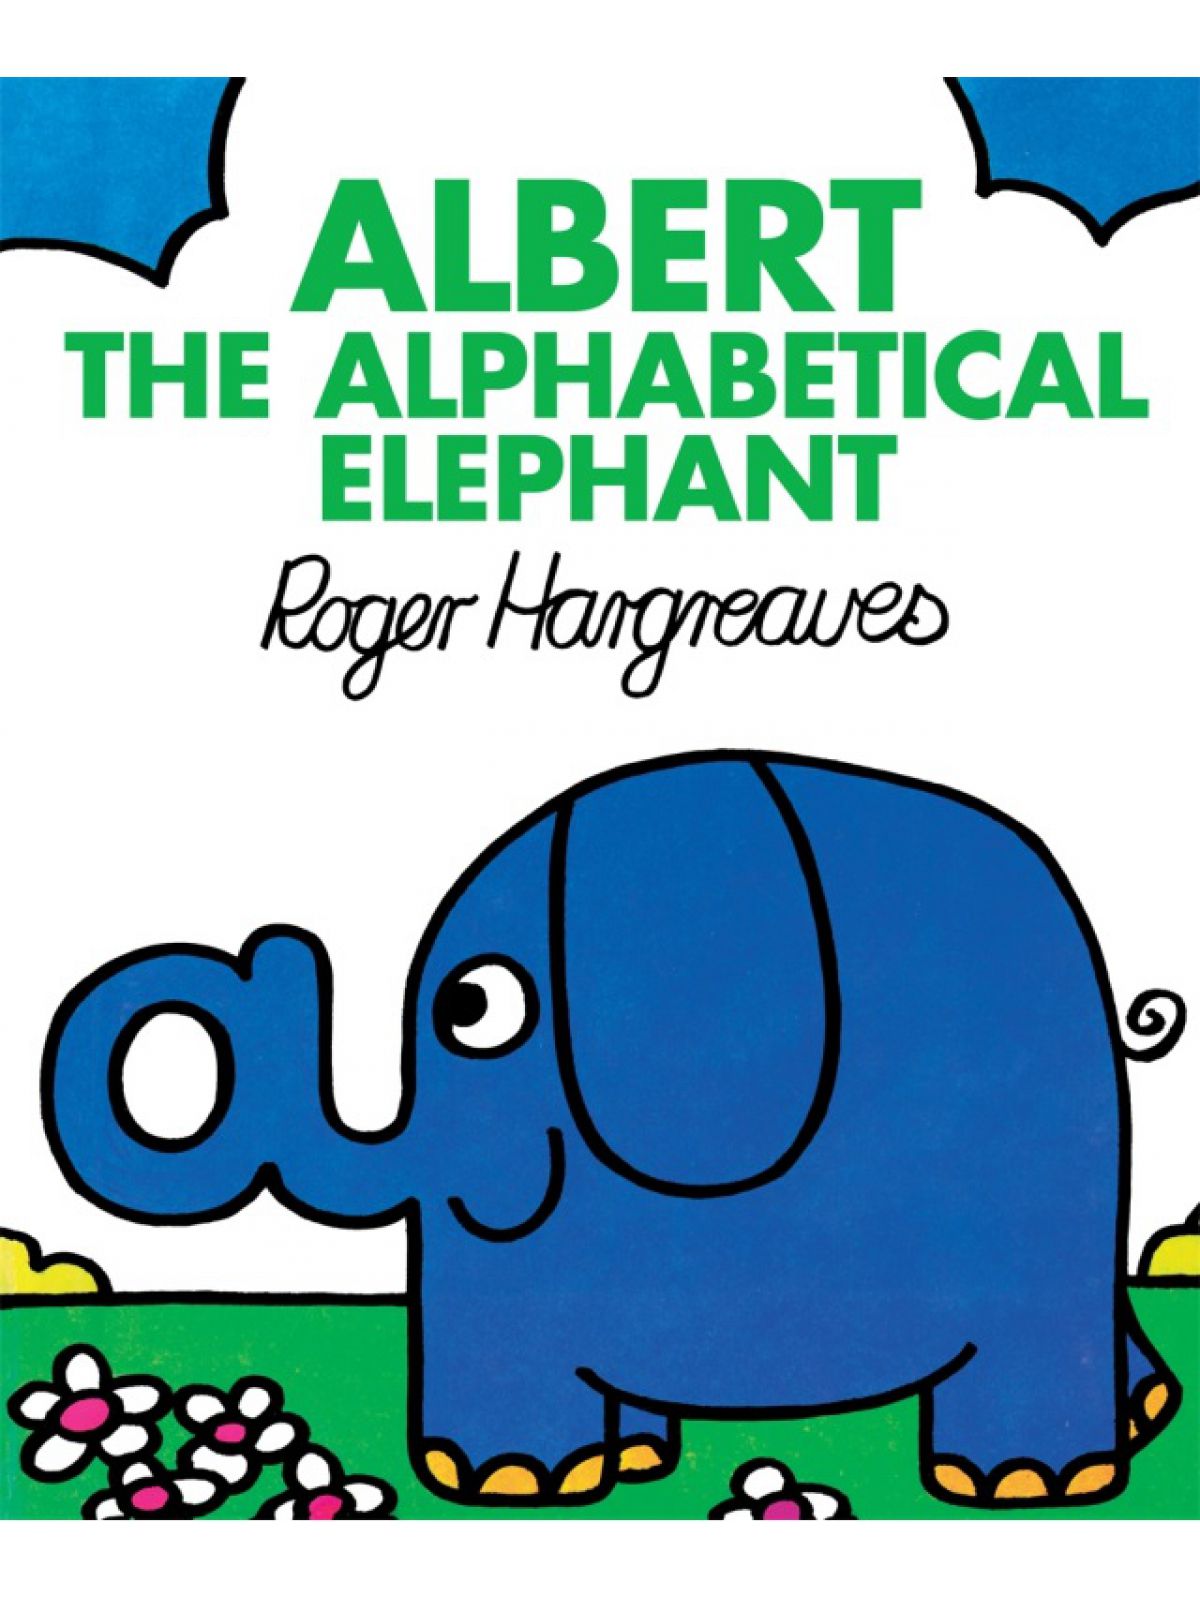 ALBERT THE ALPHABETICAL ELEPHANT  Купить Книгу на Английском